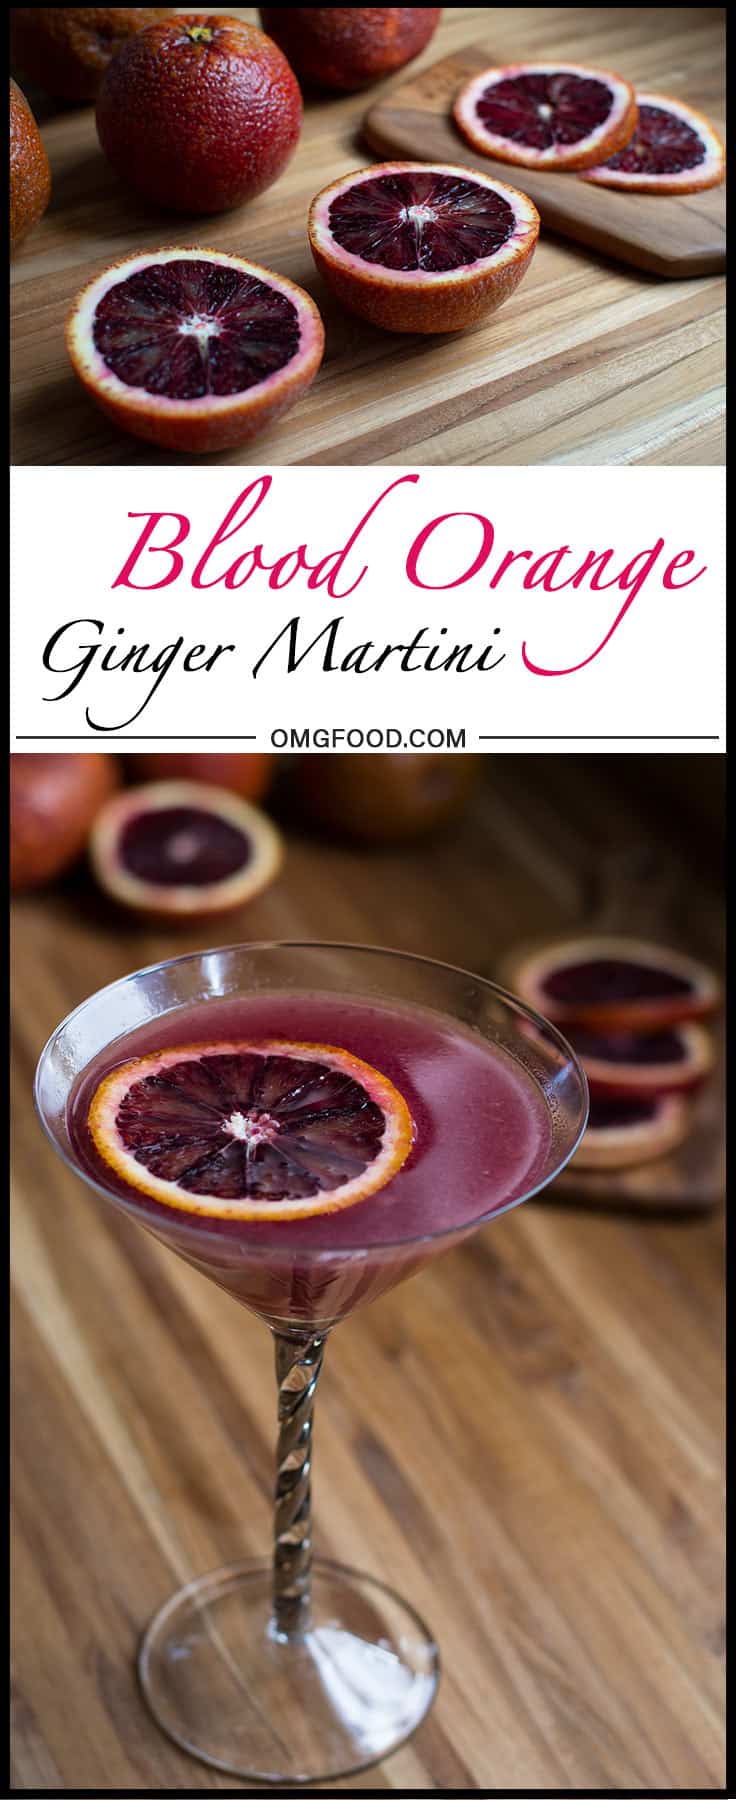 A pinterest banner of a blood orange ginger martini.